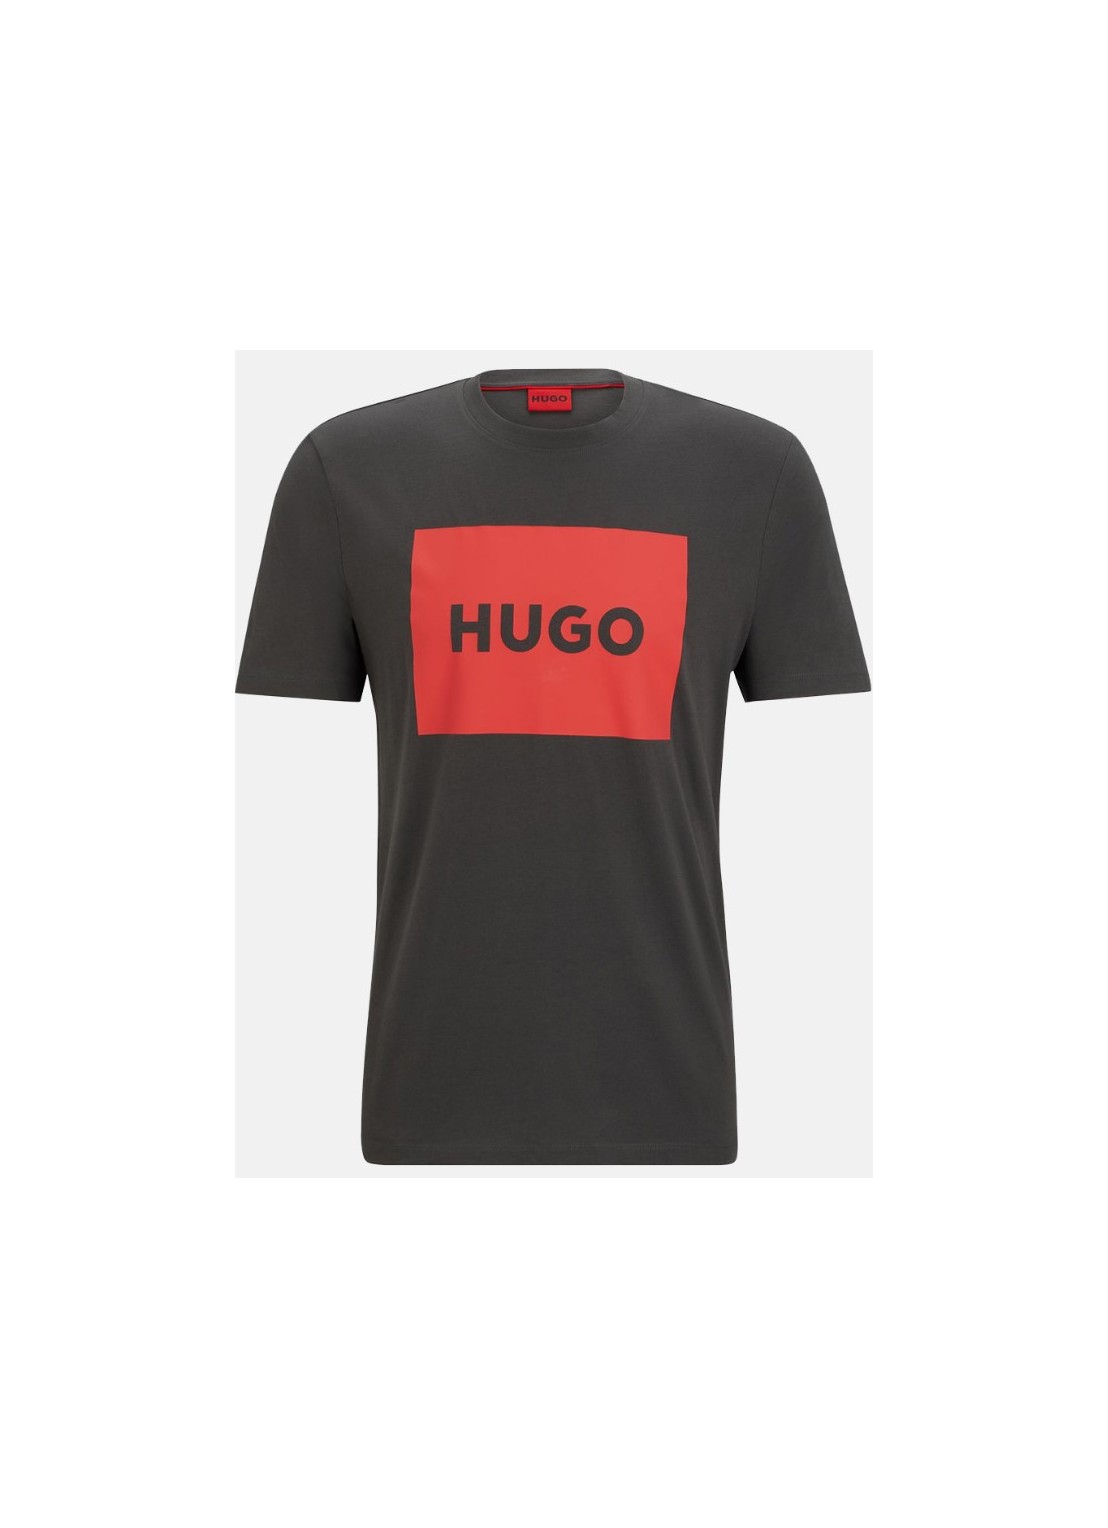 Camiseta hugo t-shirt man dulive222 50467952 023 talla M
 